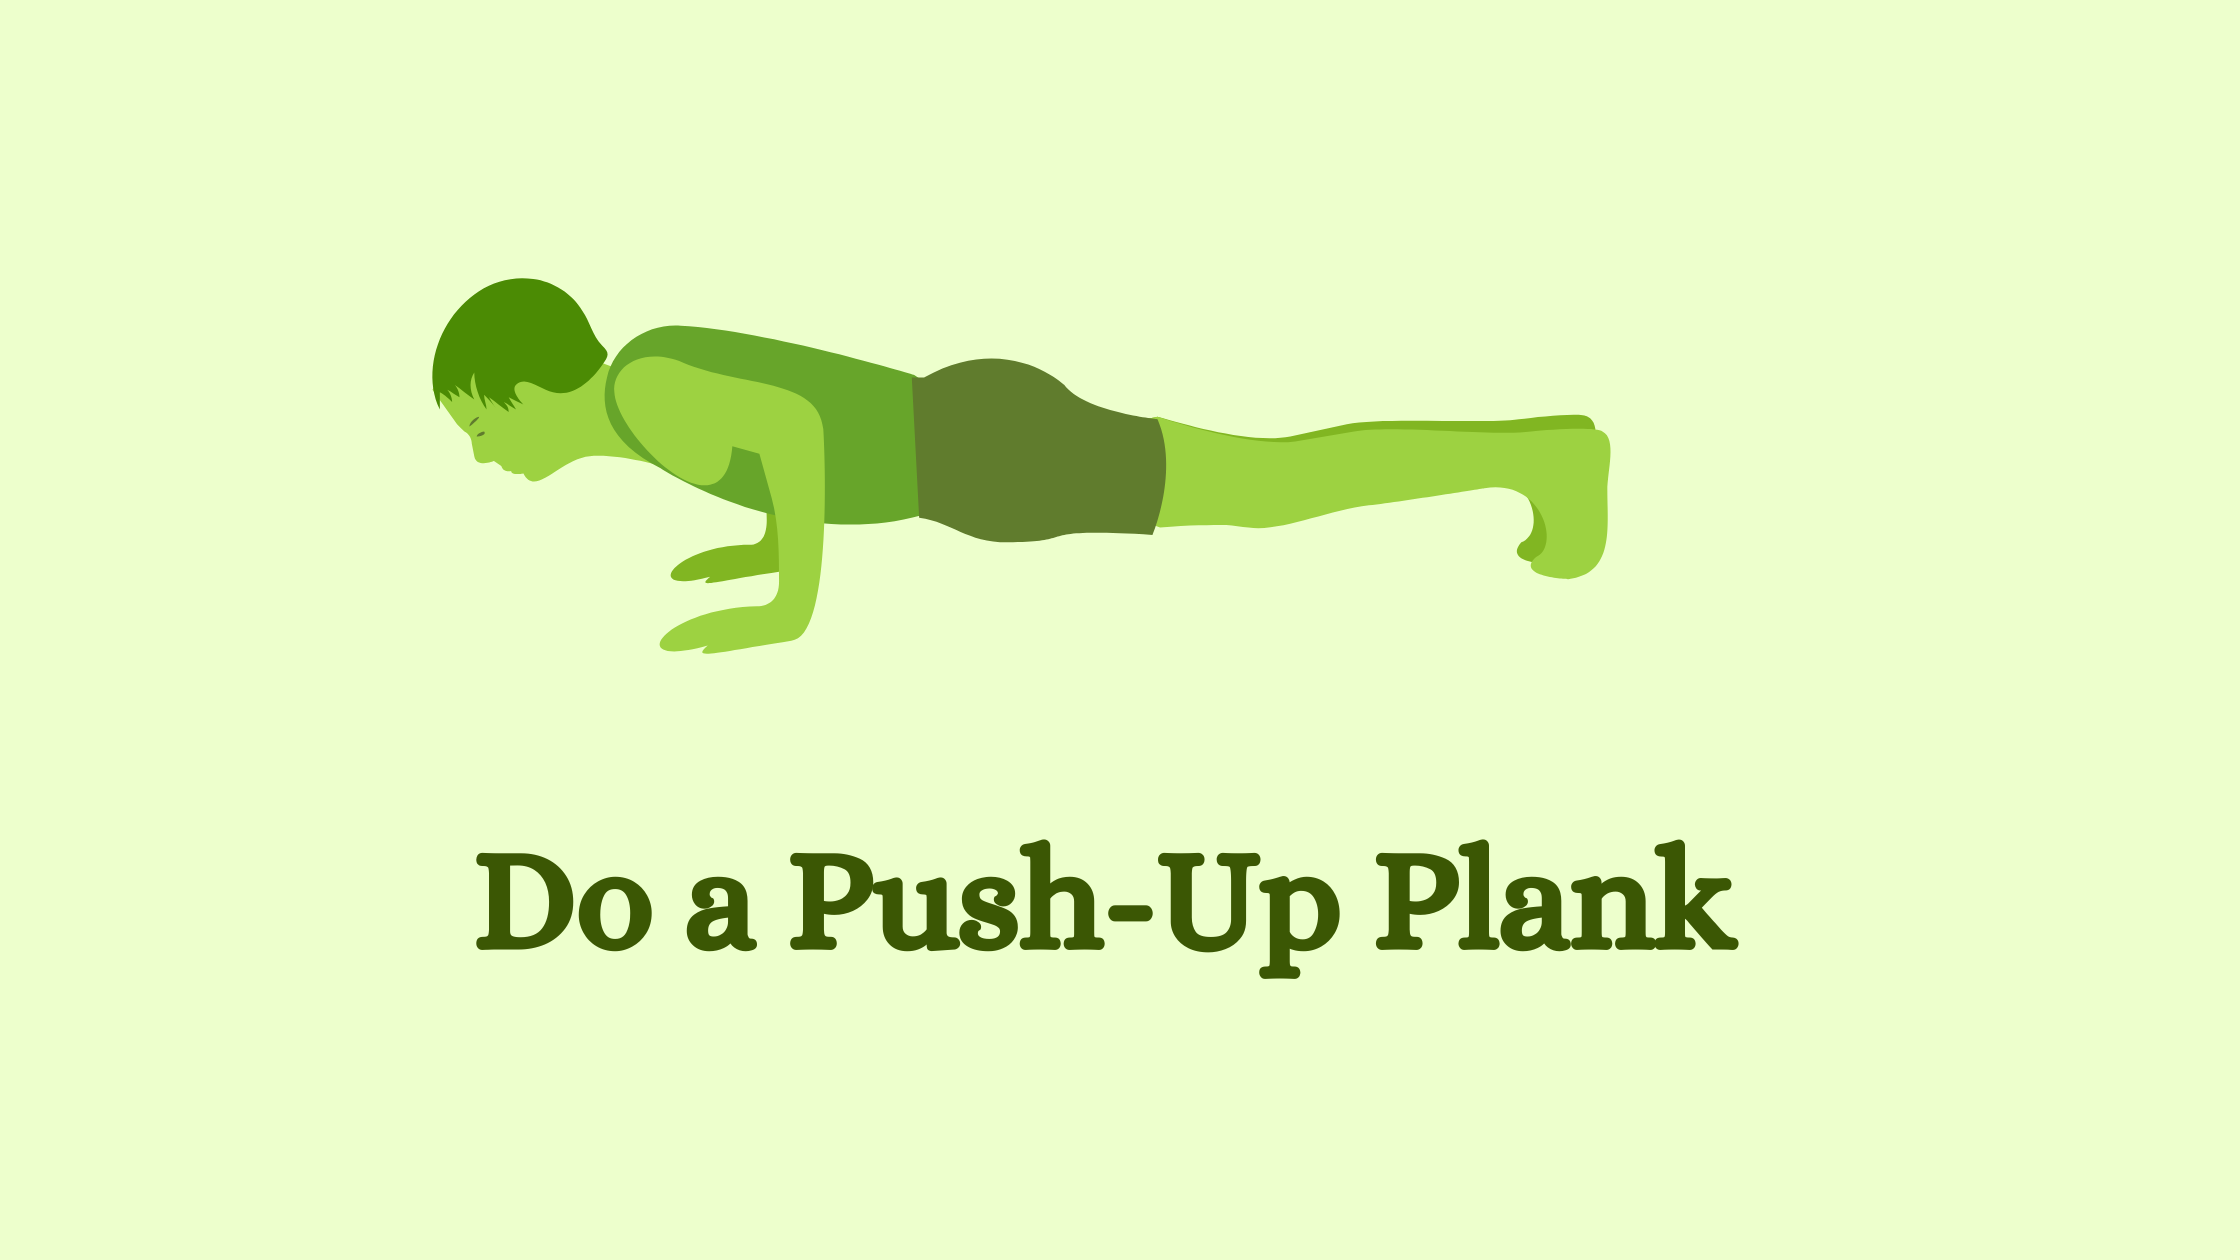 Plank push up